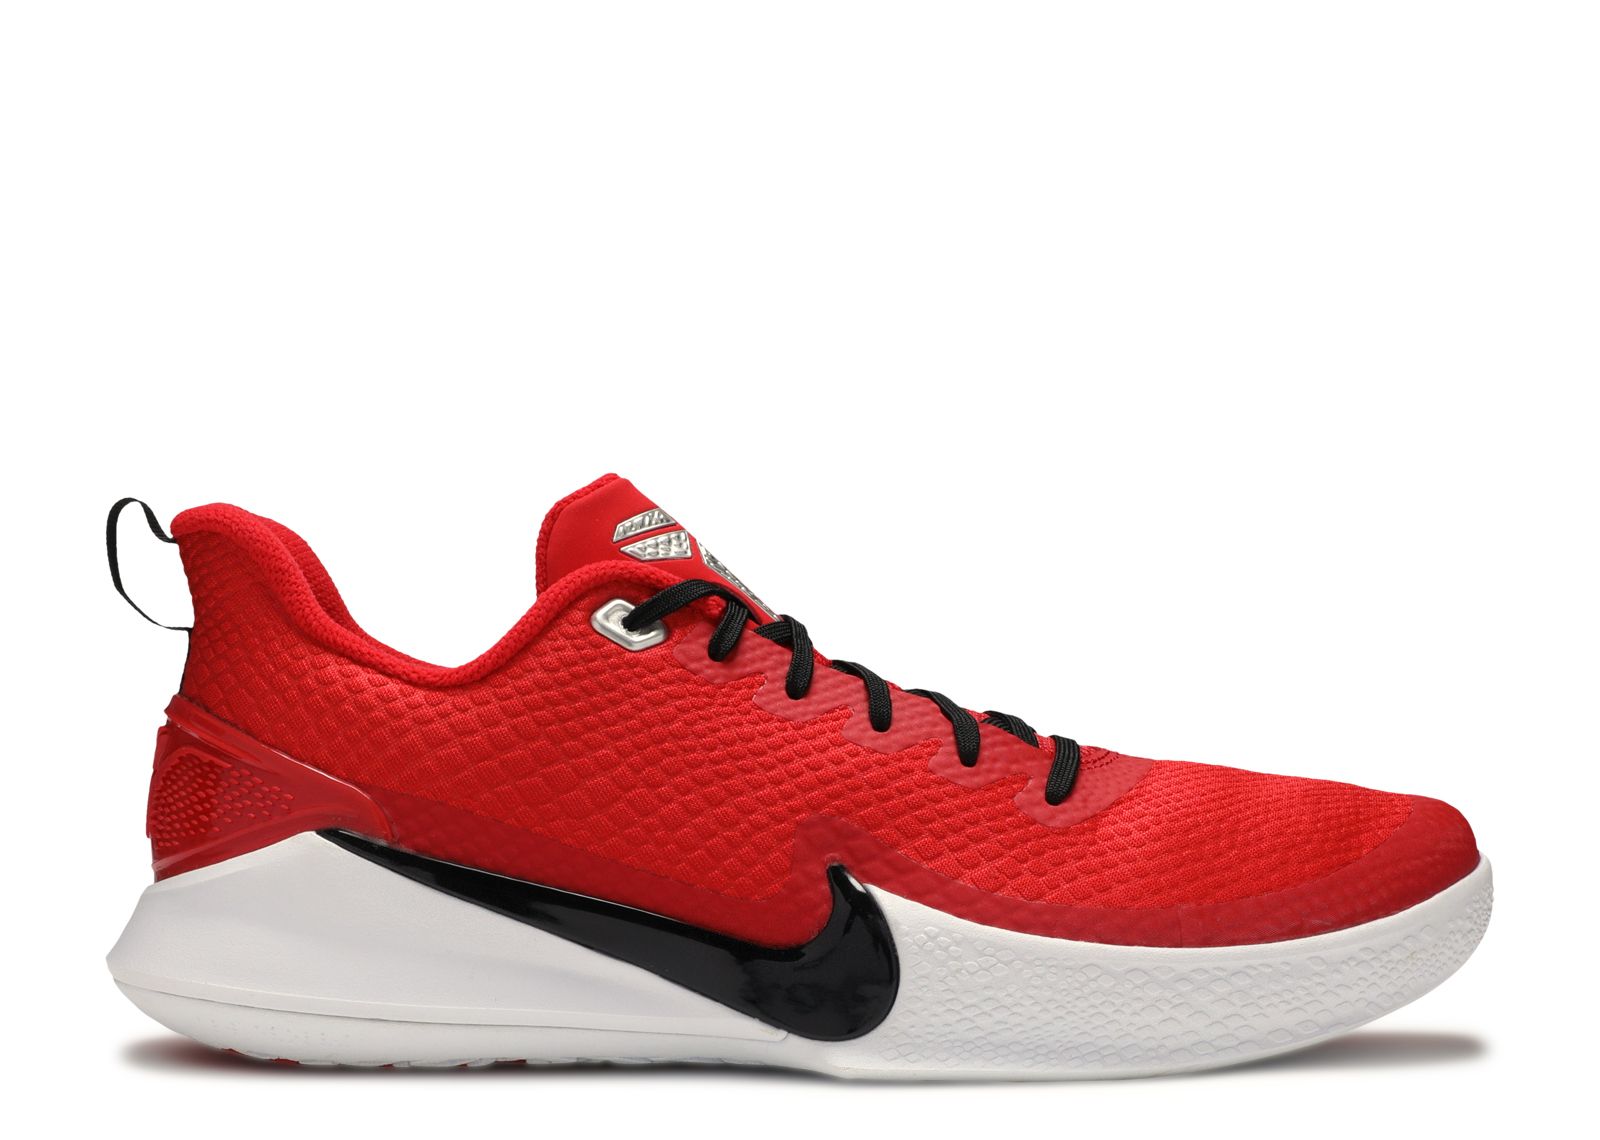 Mamba Focus TB 'University Red' - Nike - AT1214 600 - university red ...